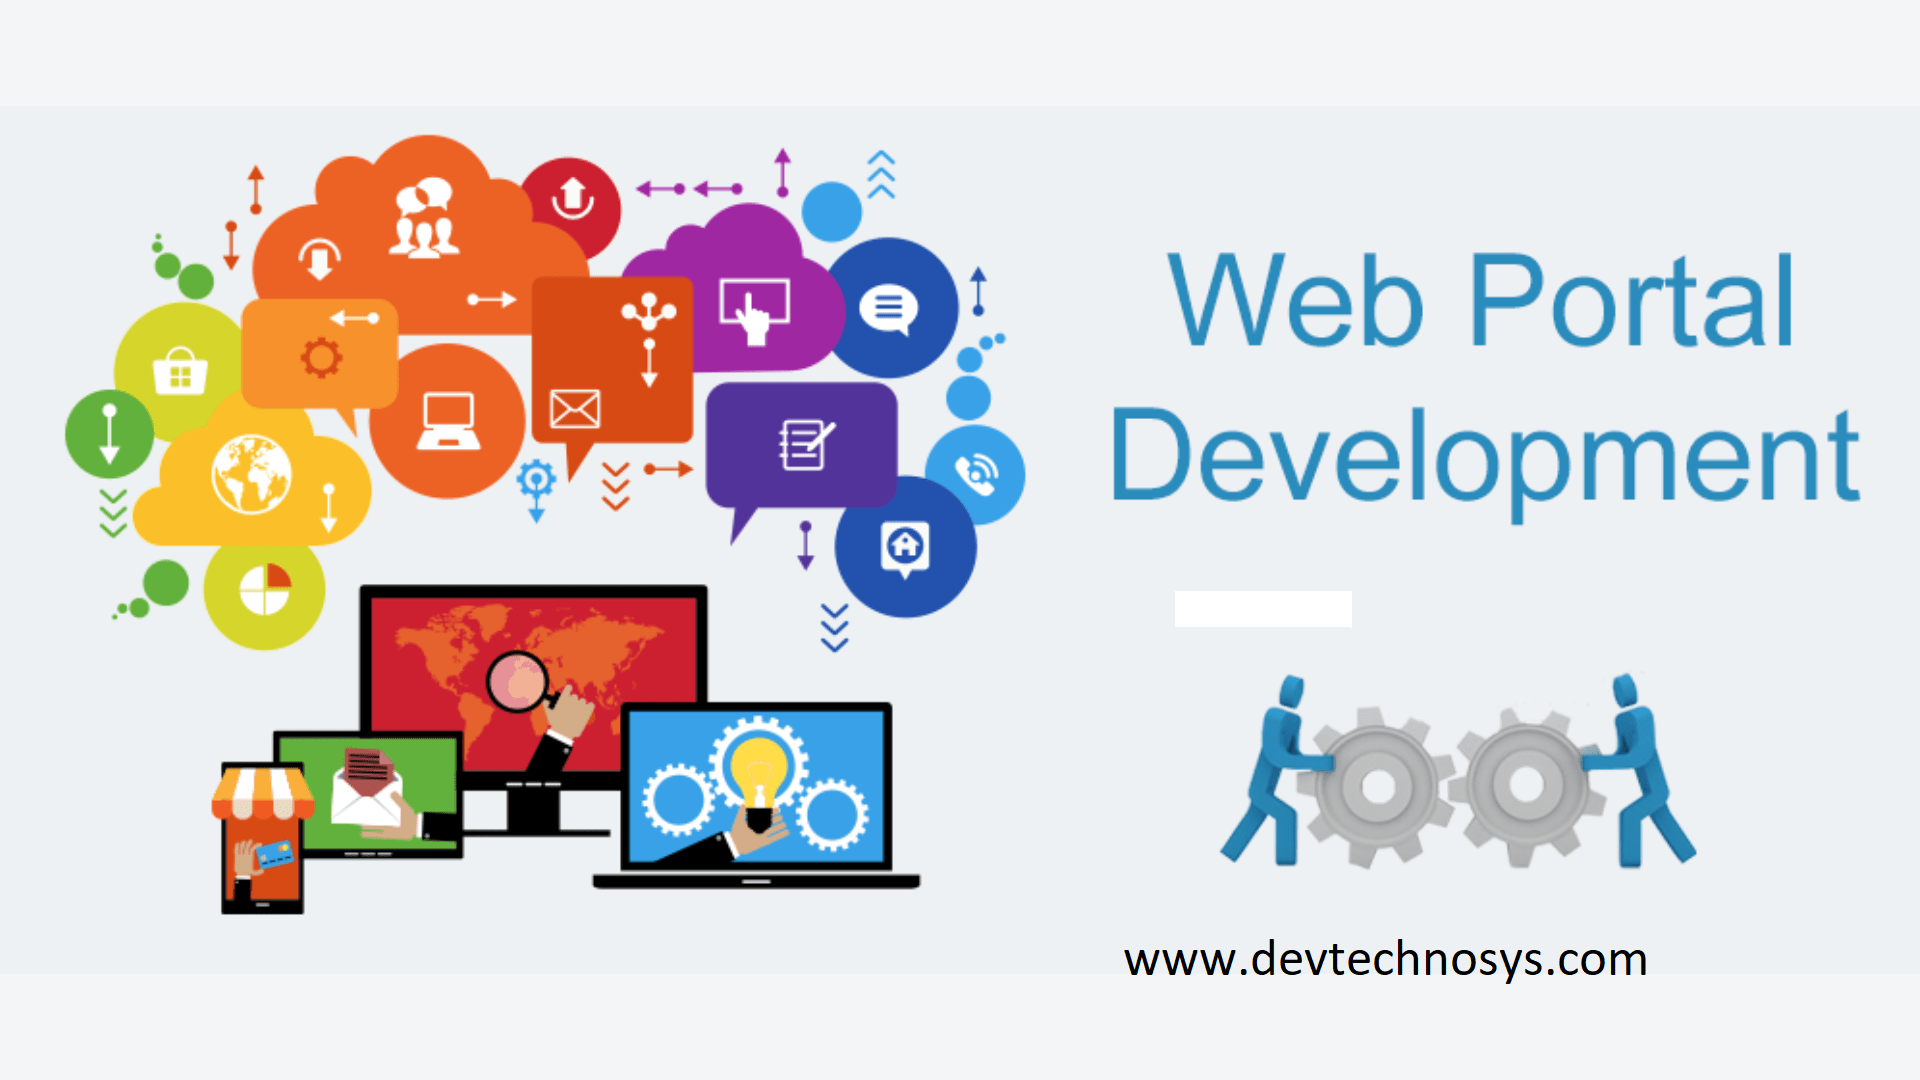 Web Portal Development Company - San Francisco Computer